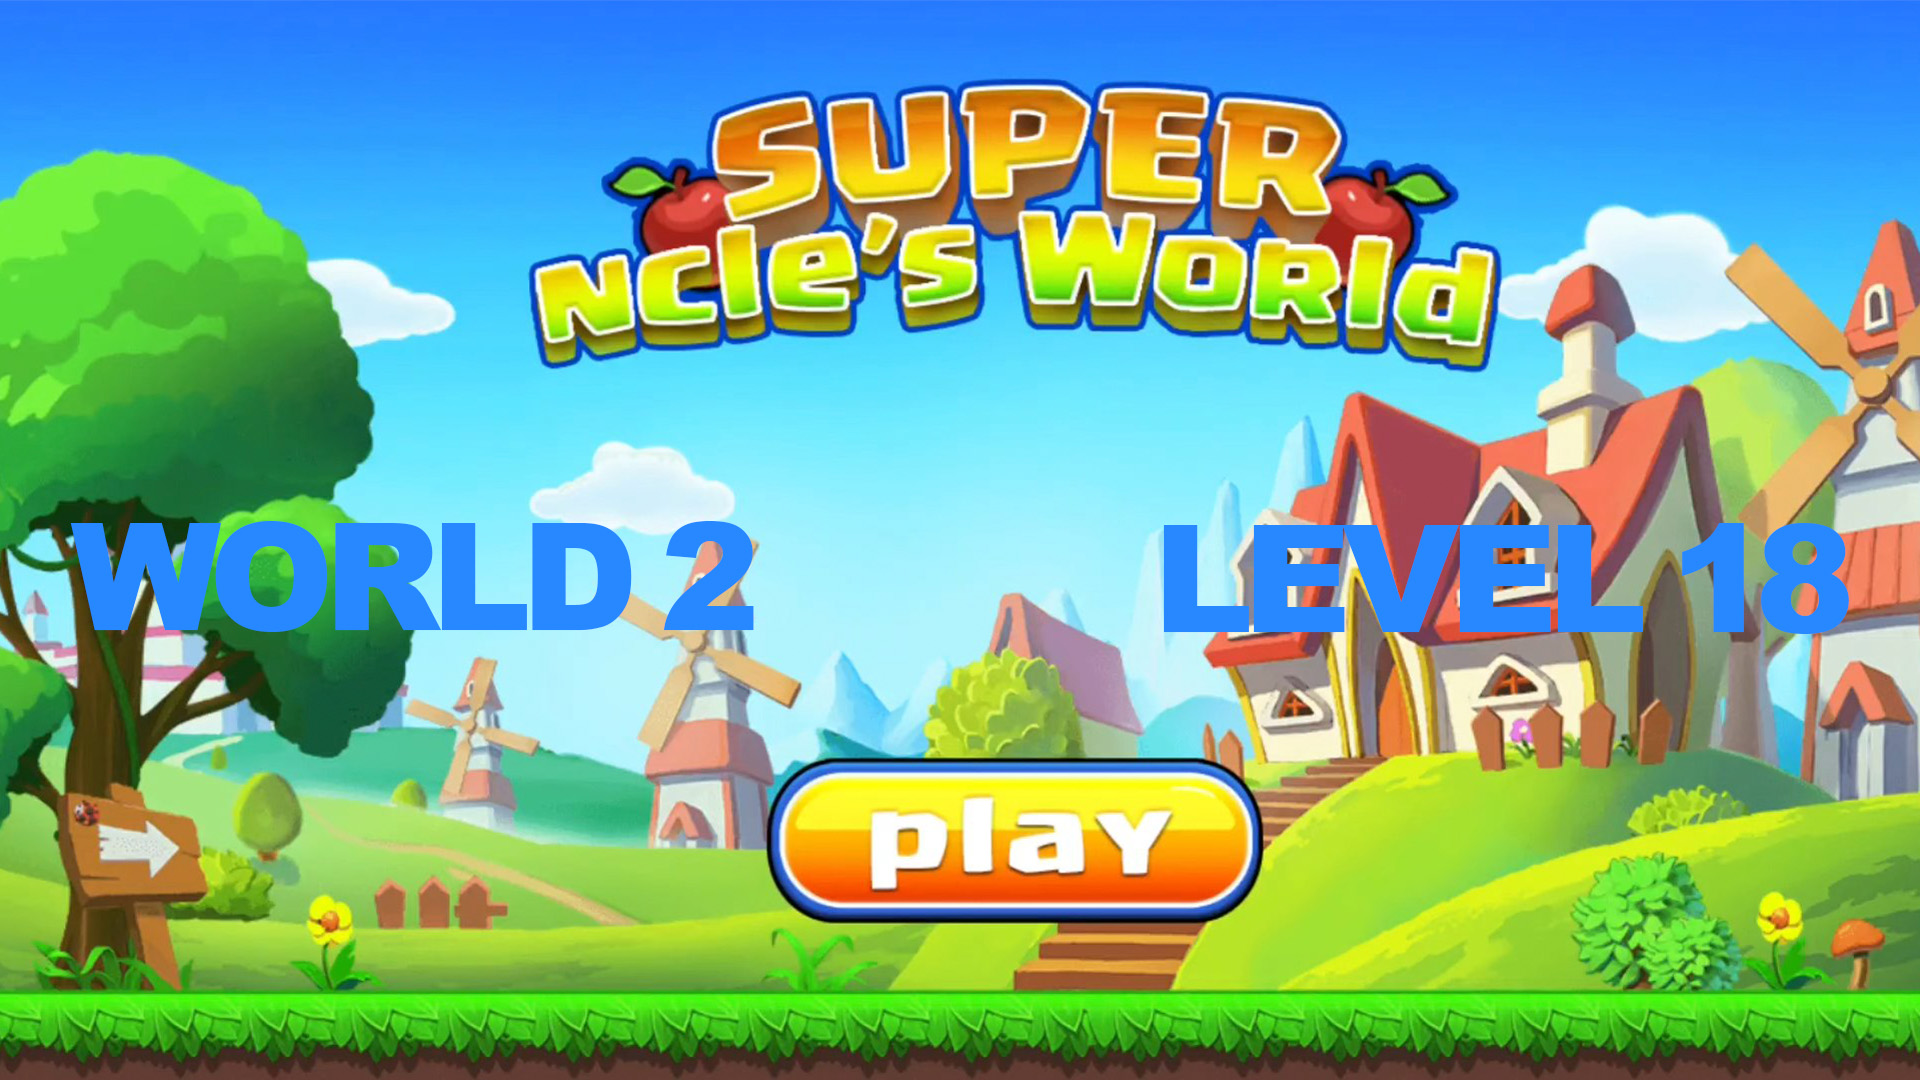 Super ncle's  World 2. level 18